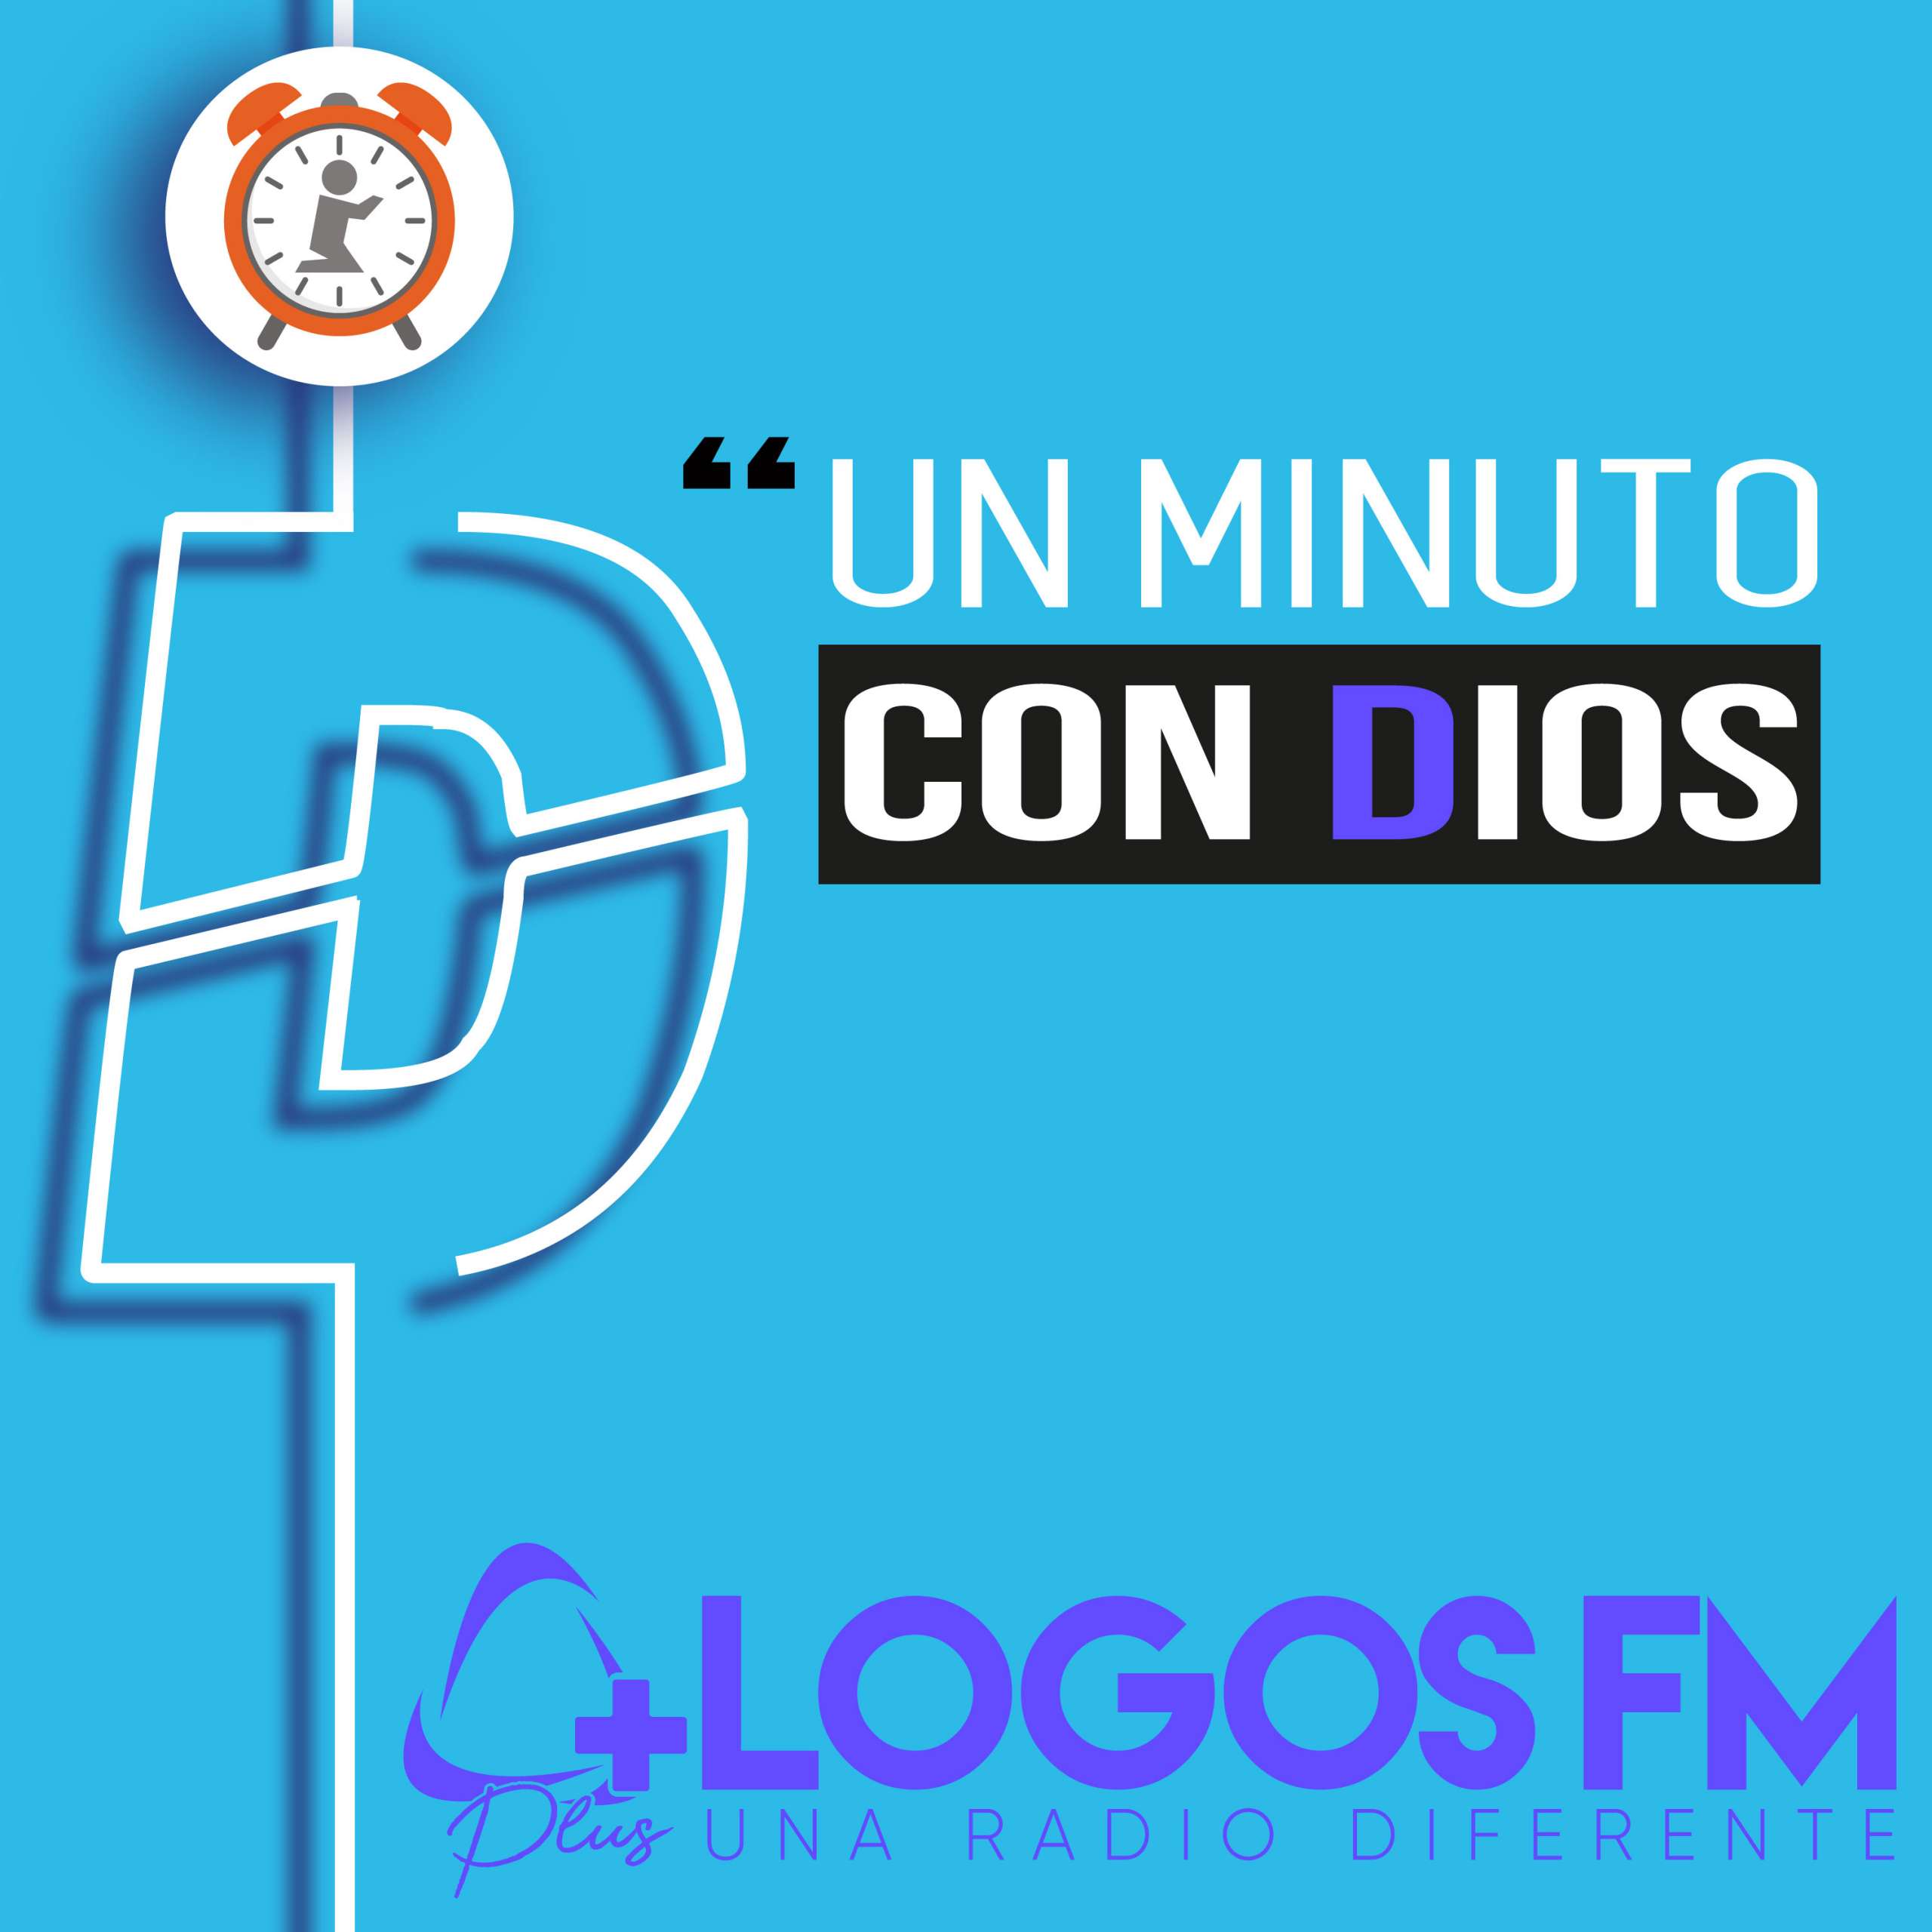 Un minuto con Dios - Episodio 407 - Loida Vargas